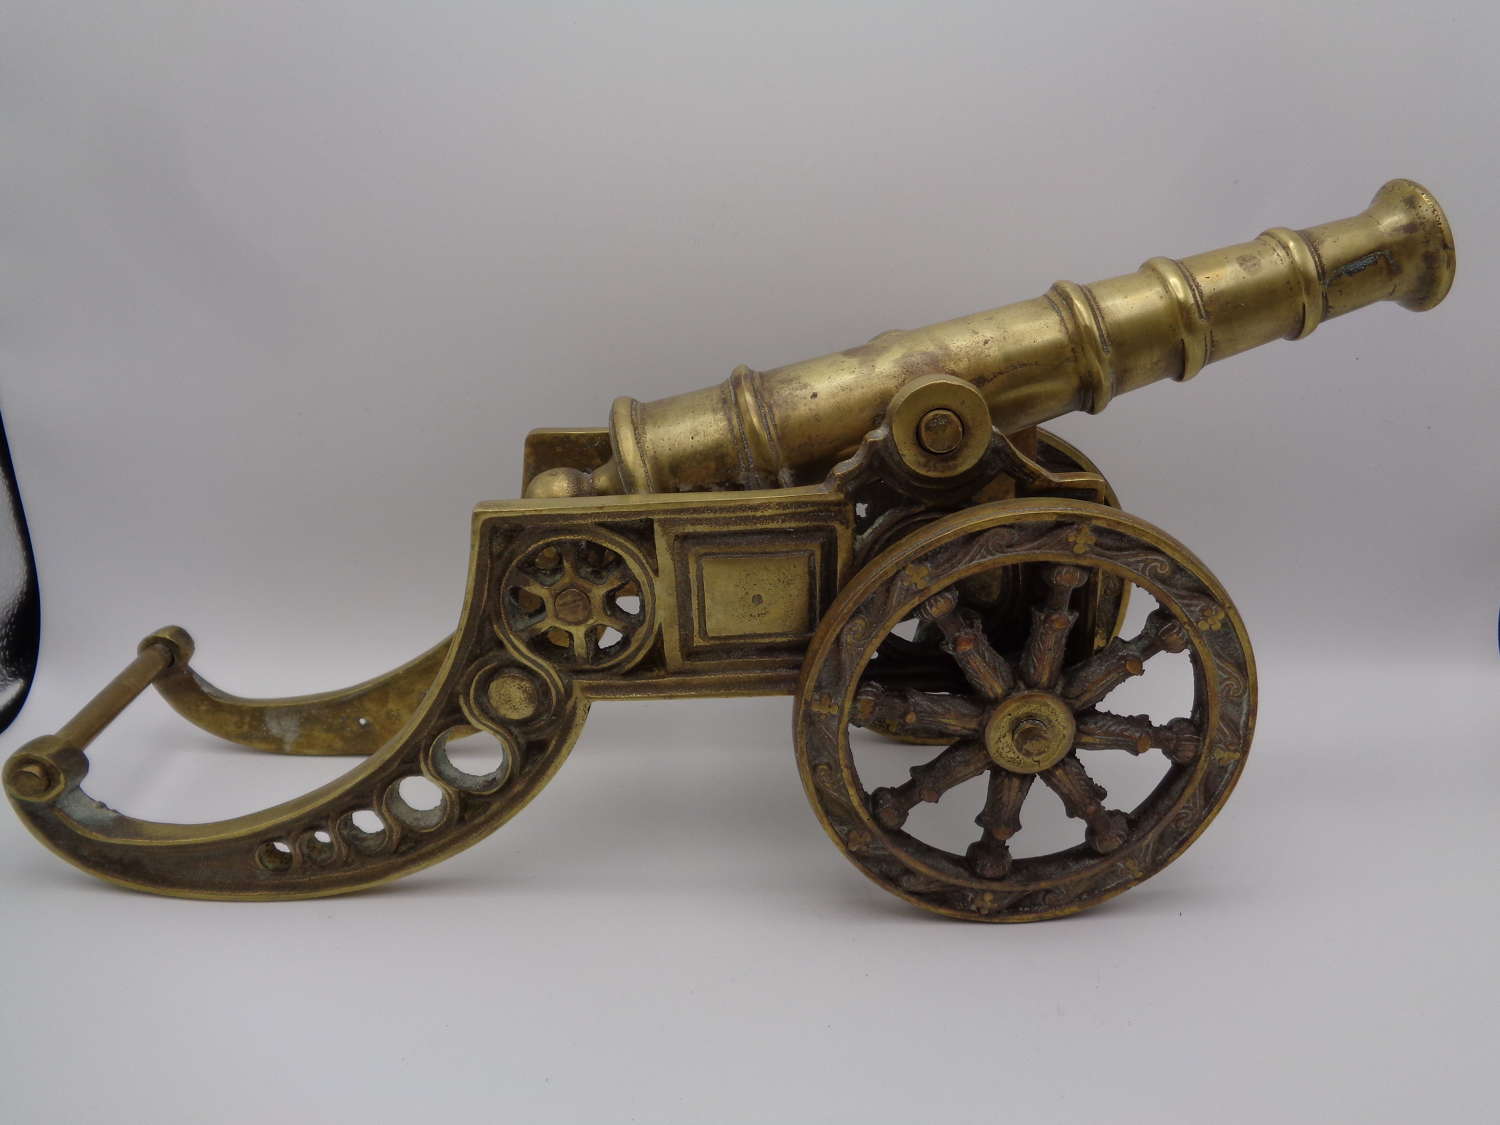 Vintage Brass Cannon - Desk Ornament